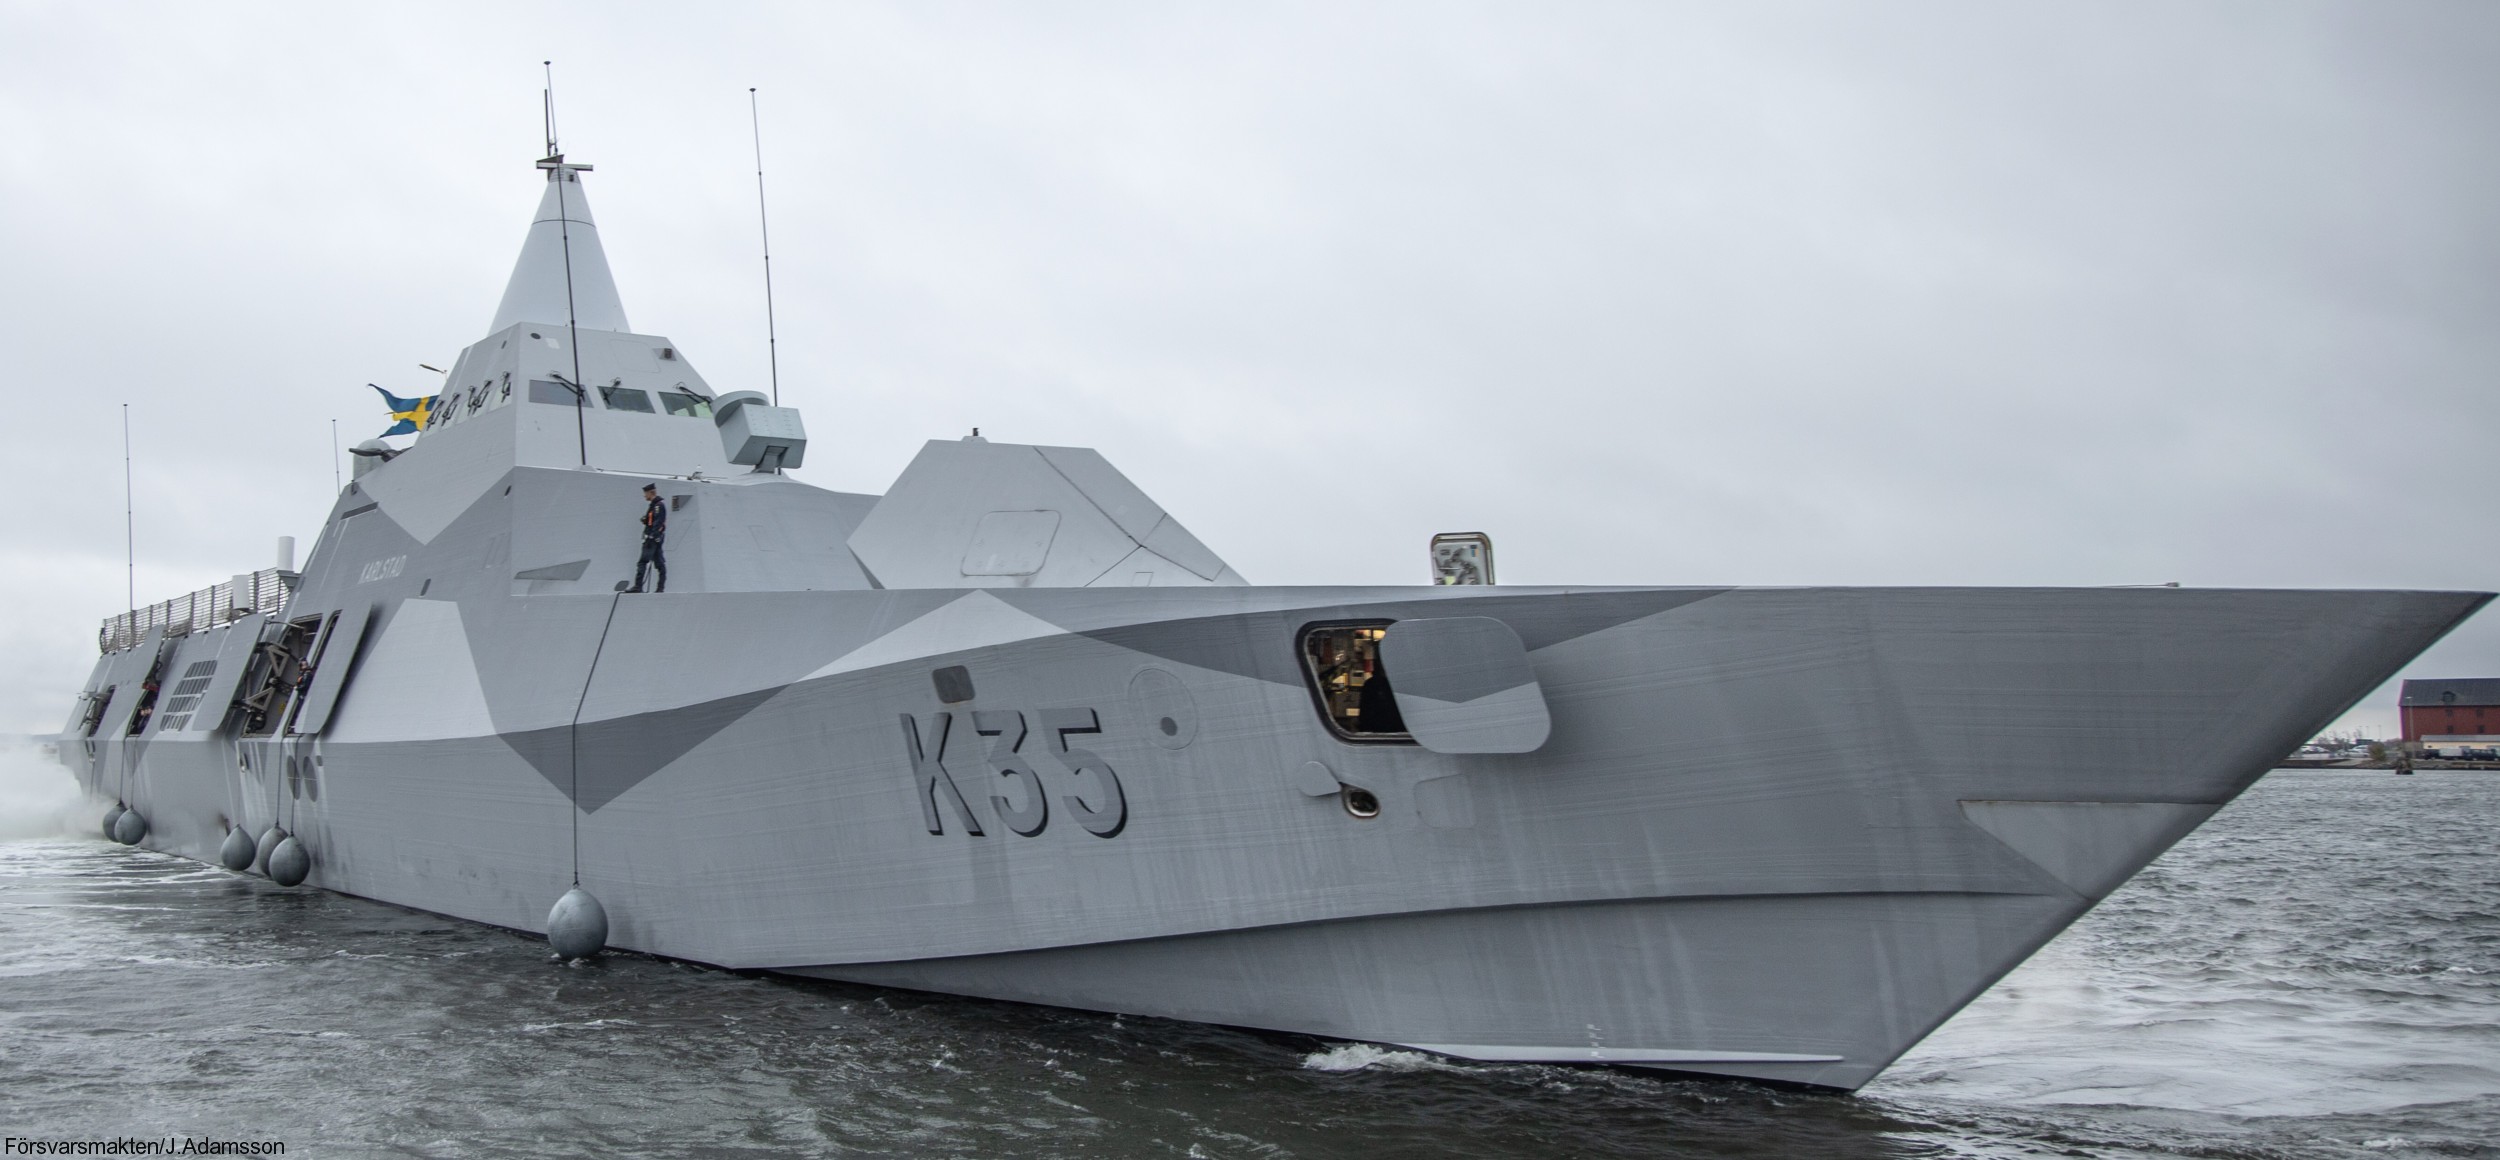 k35 hswms hms karlstad visby class corvette royal swedish navy svenska marinen 08